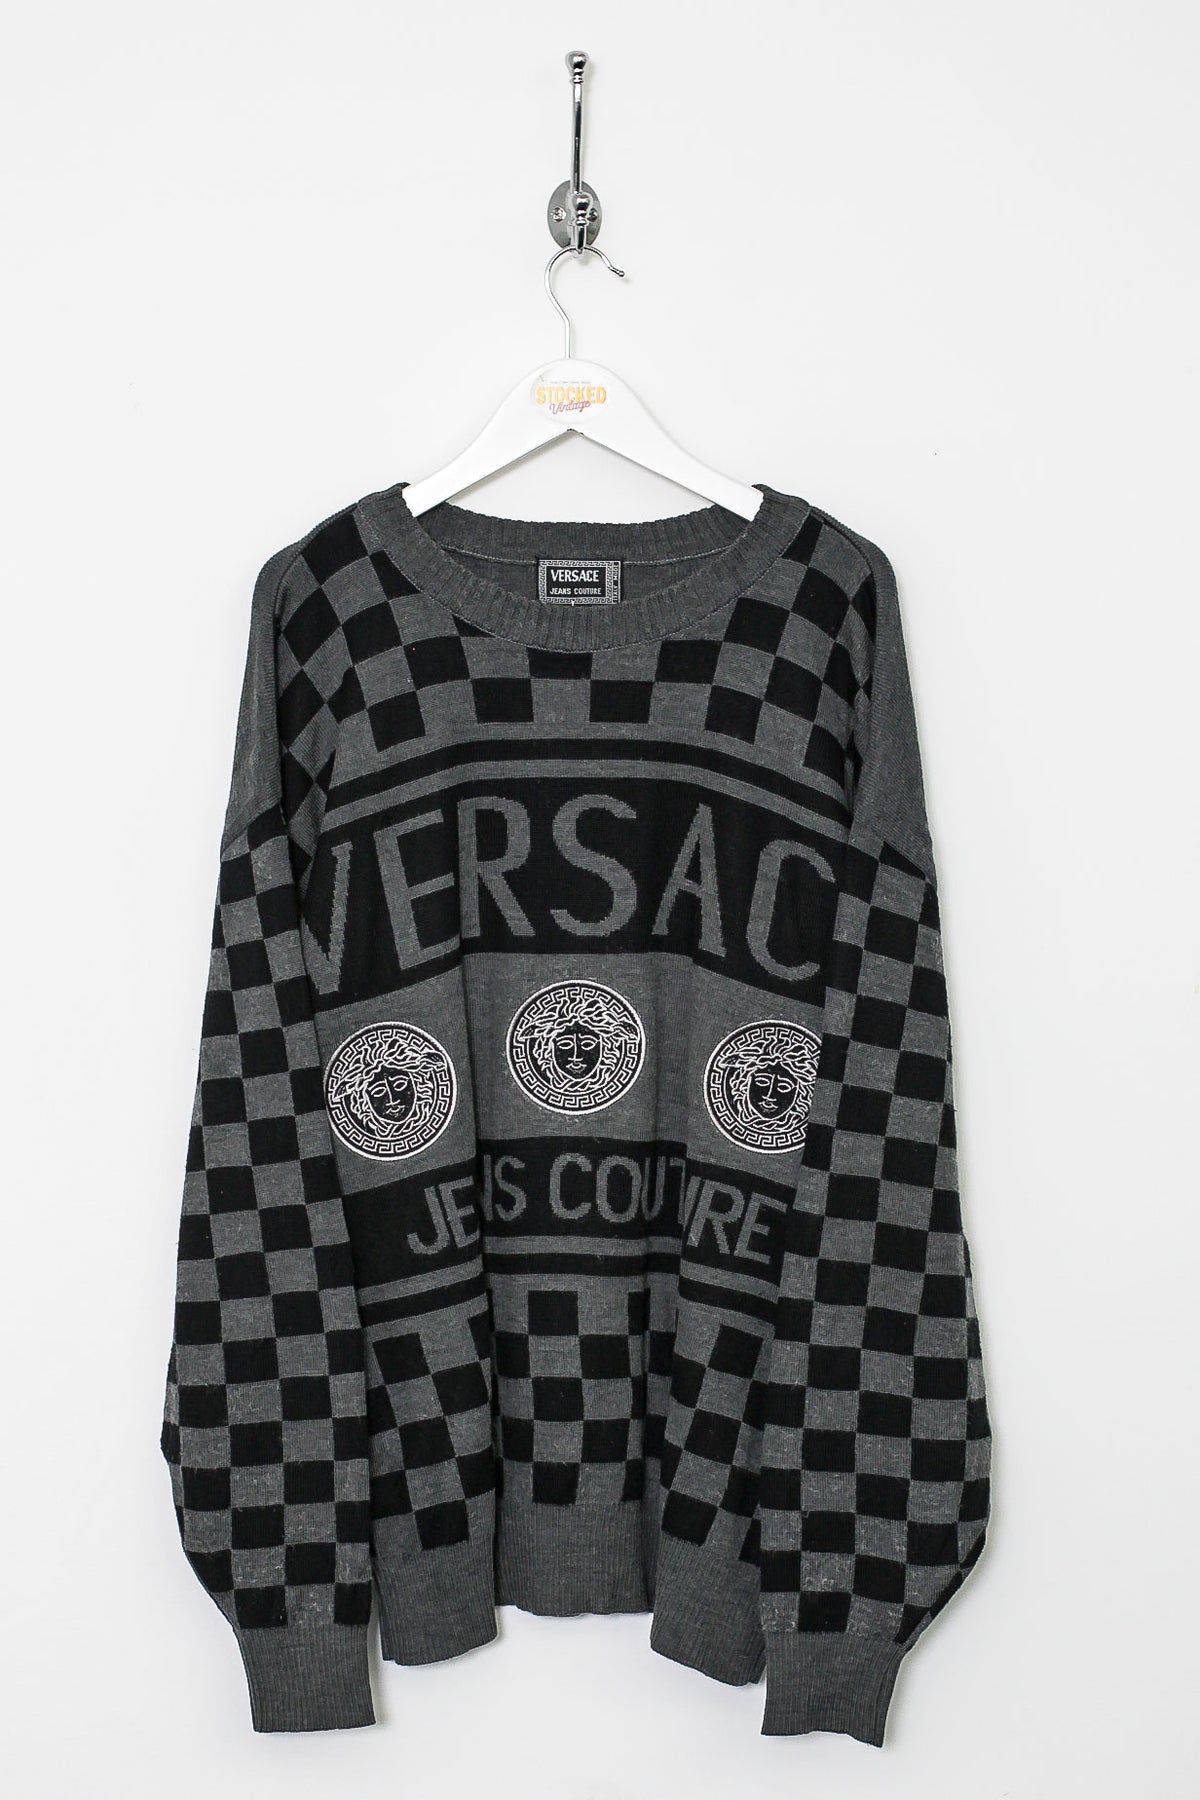 90s Versace Knit Sweatshirt (L)